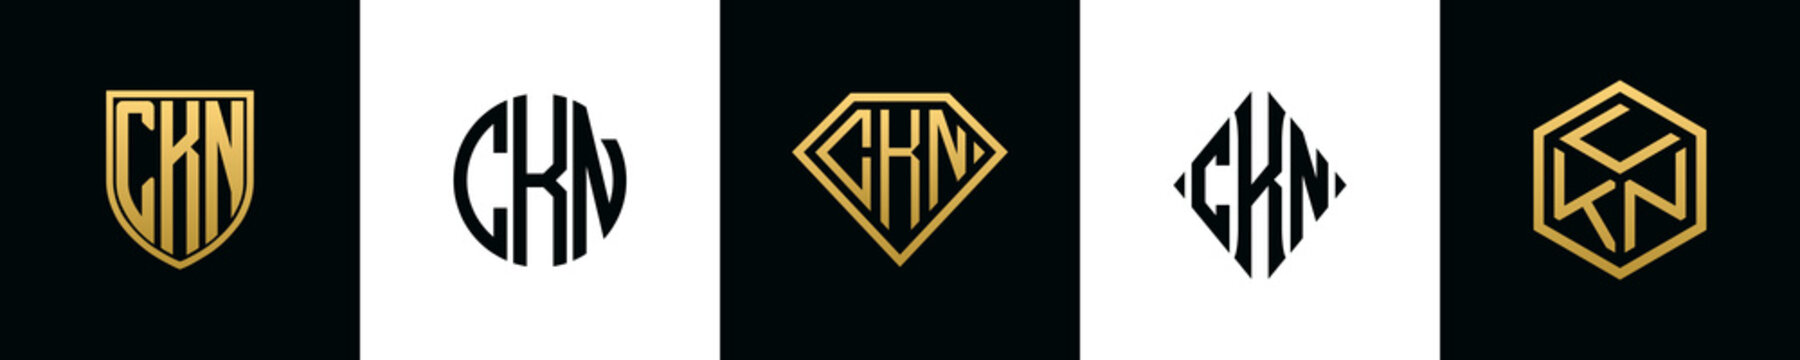 Initial letters CKN logo designs Bundle